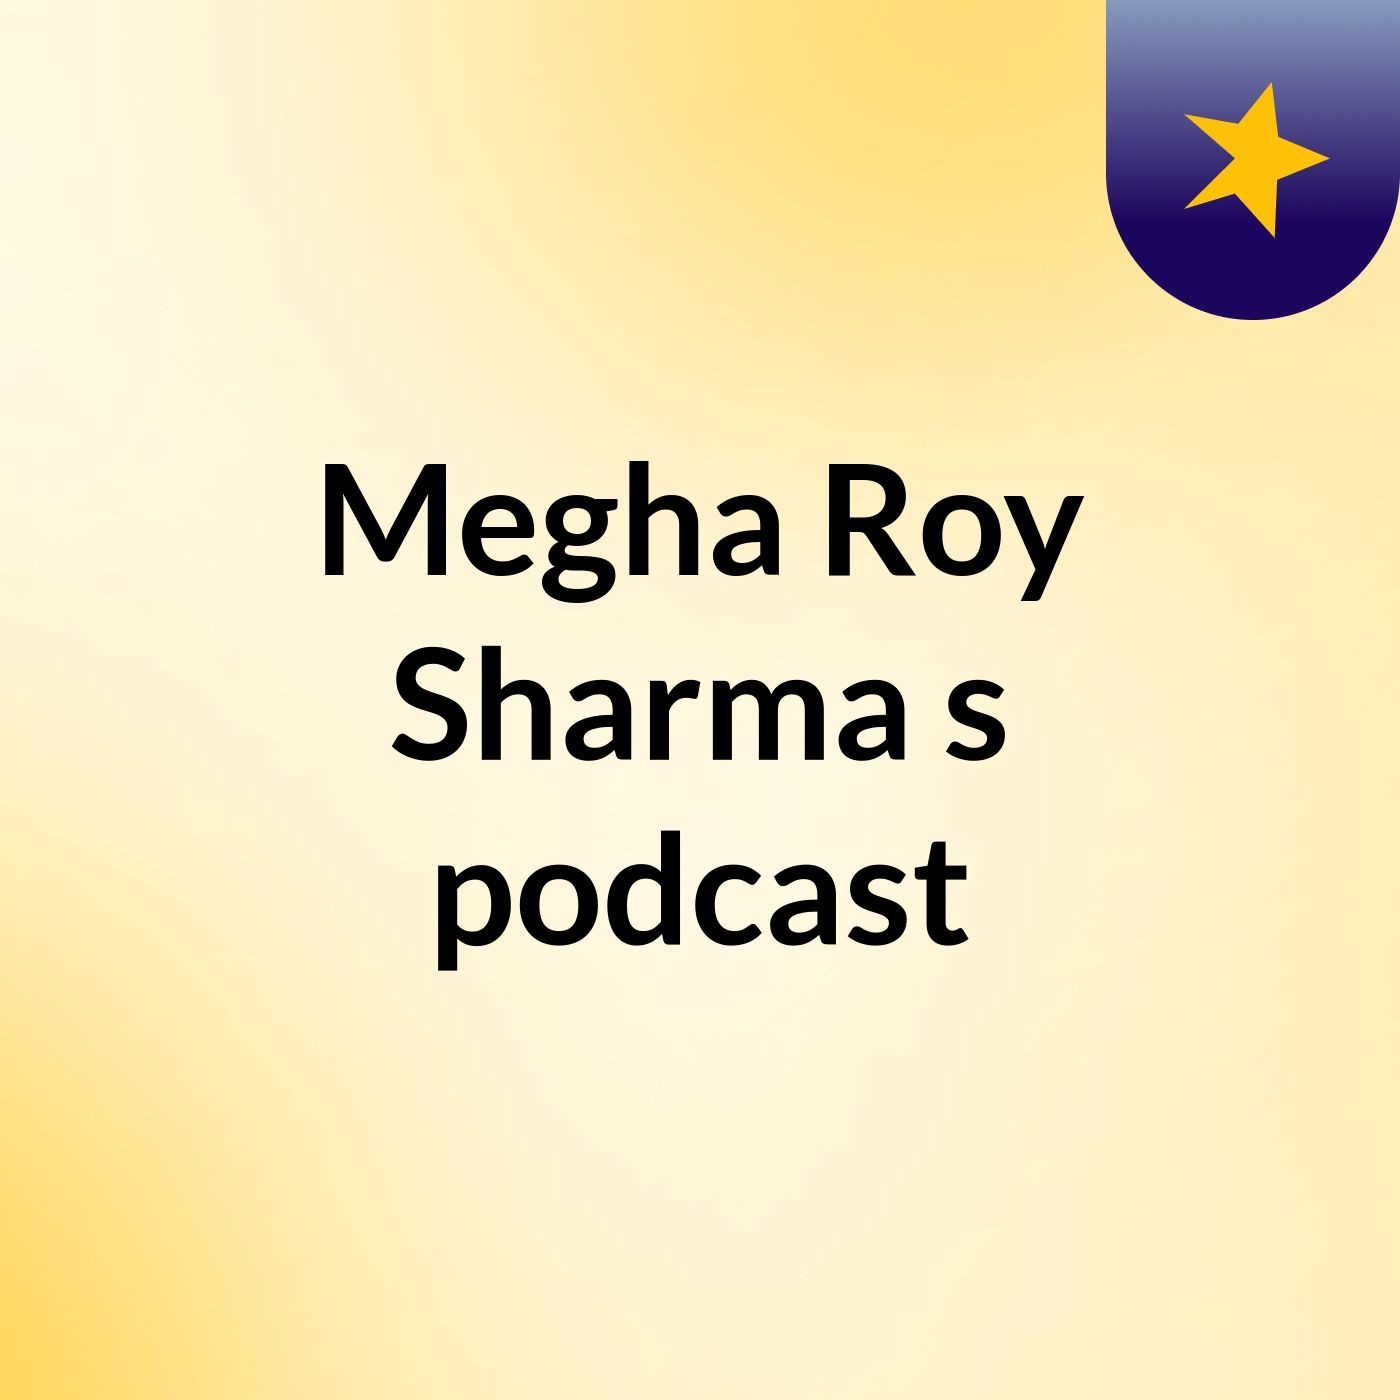 Megha Roy Sharma's podcast